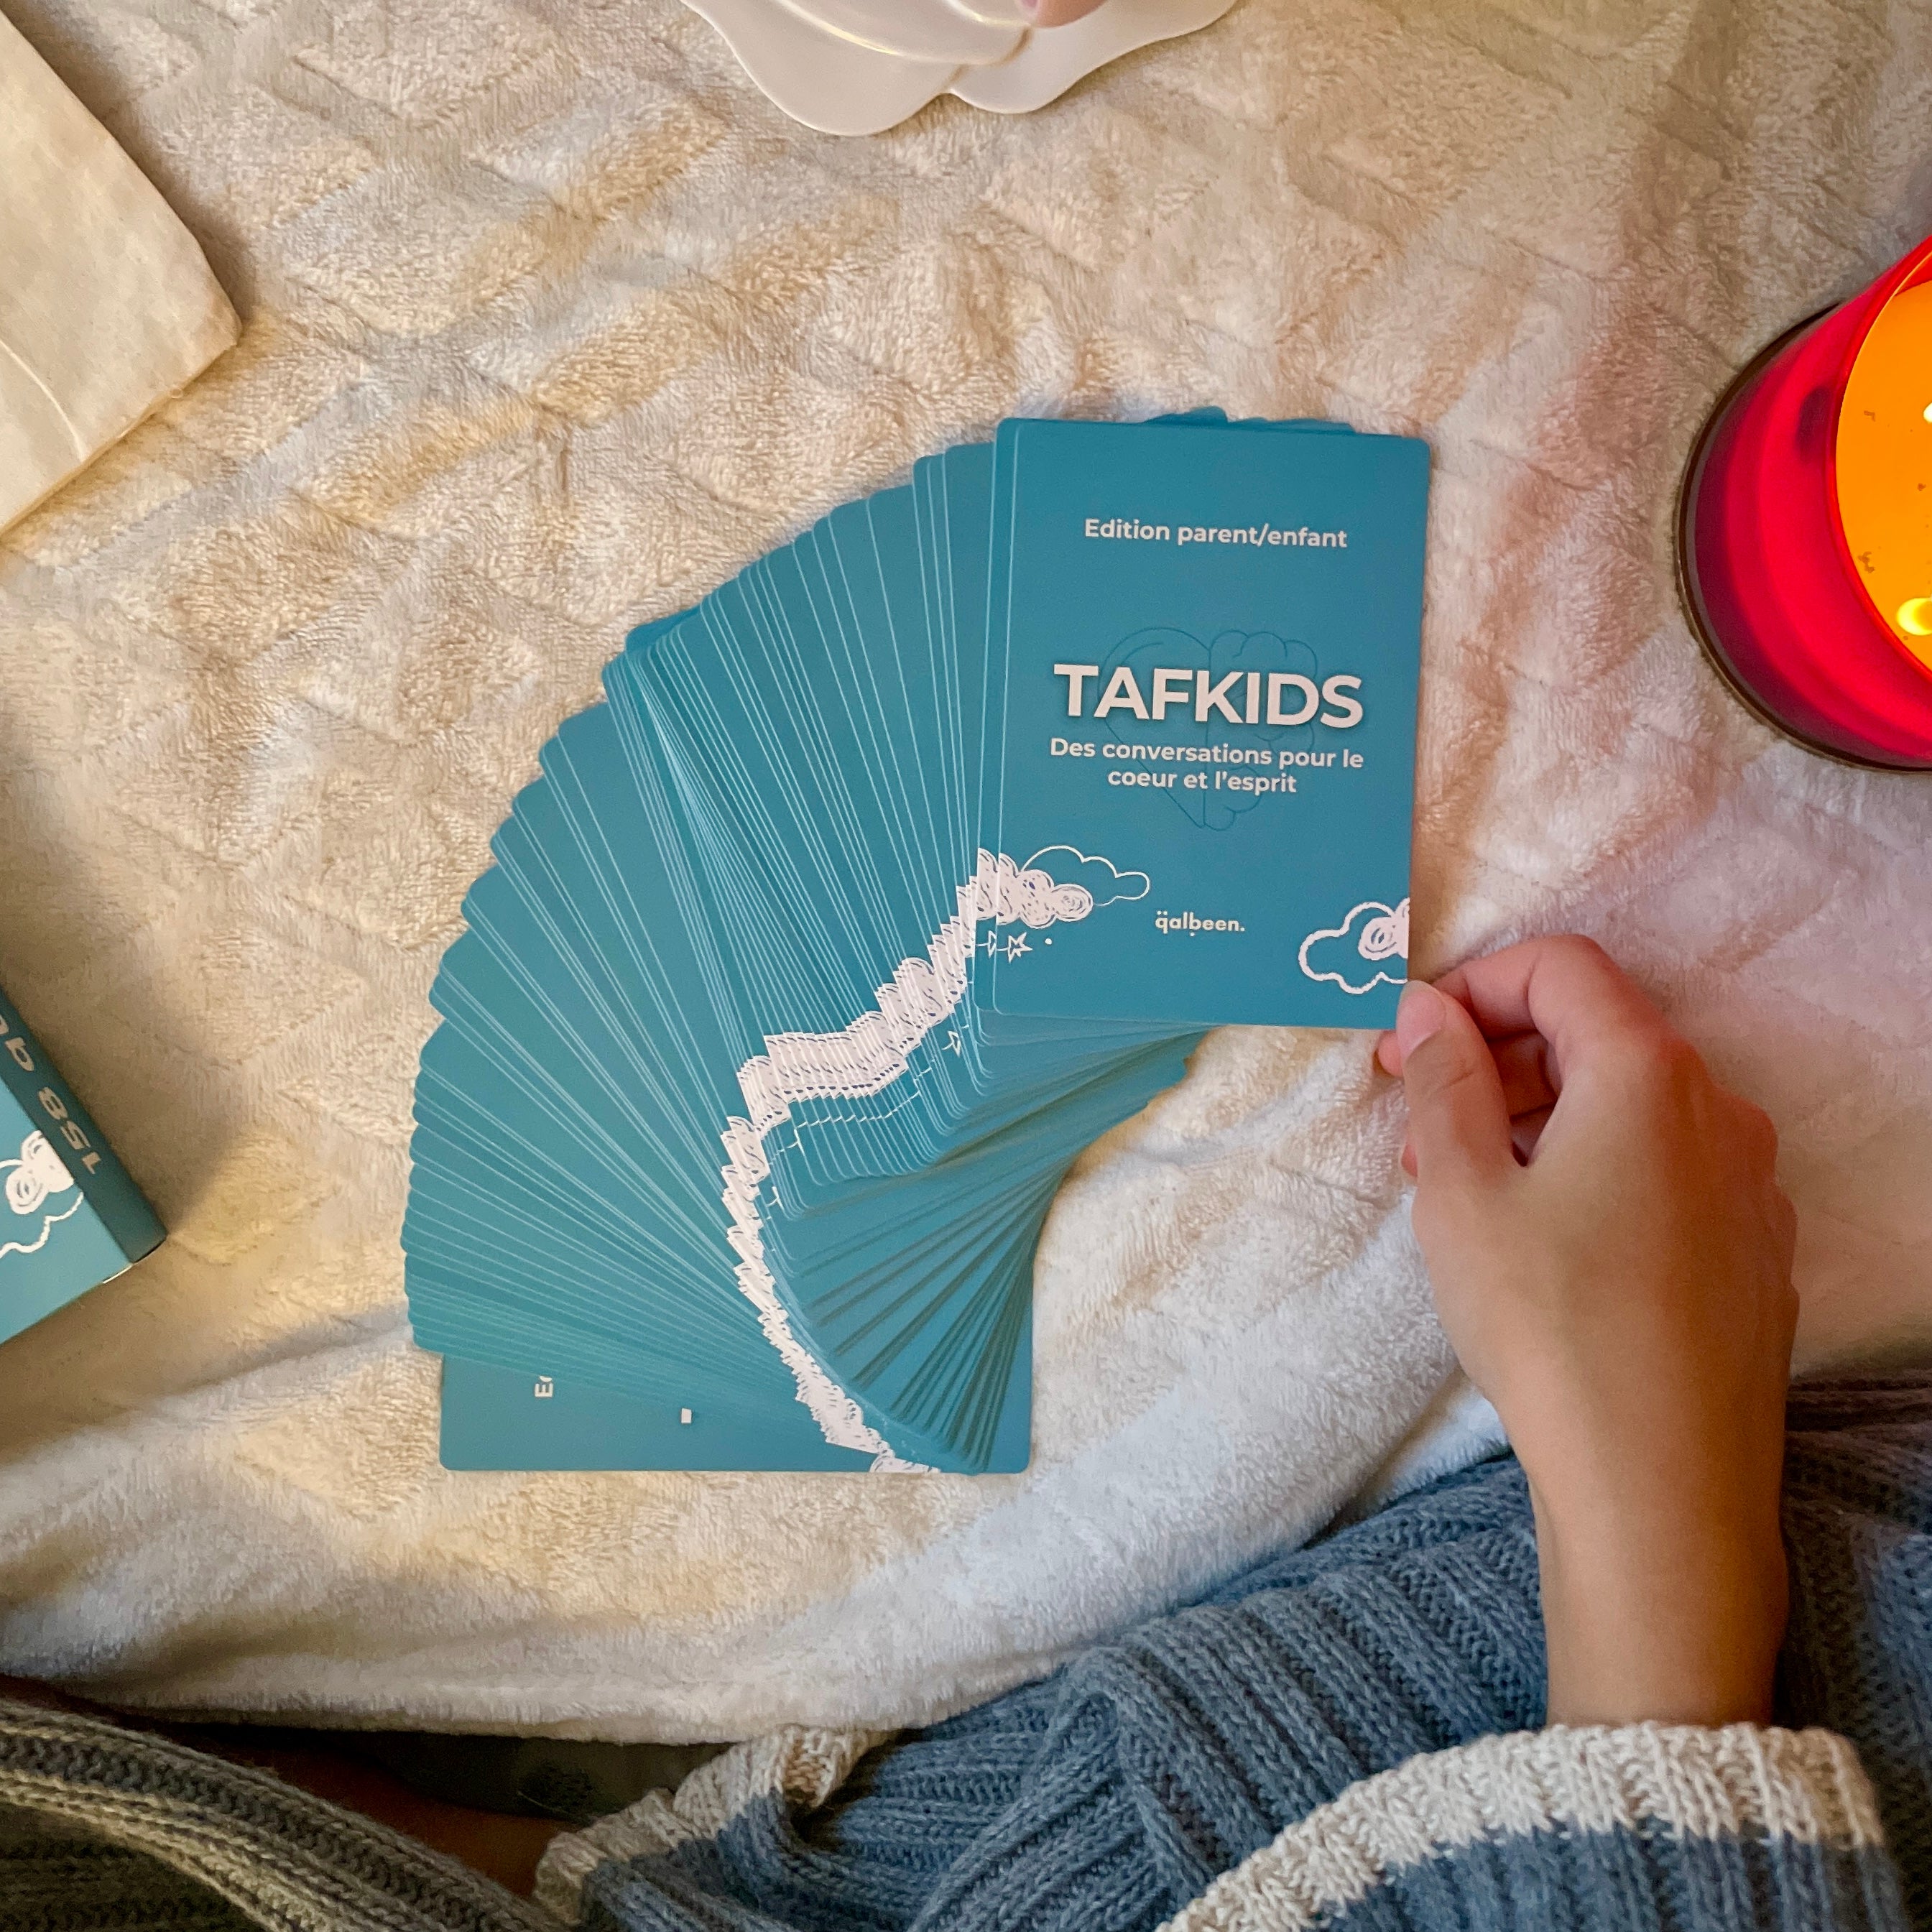 Tafkids cards: Parent child edition